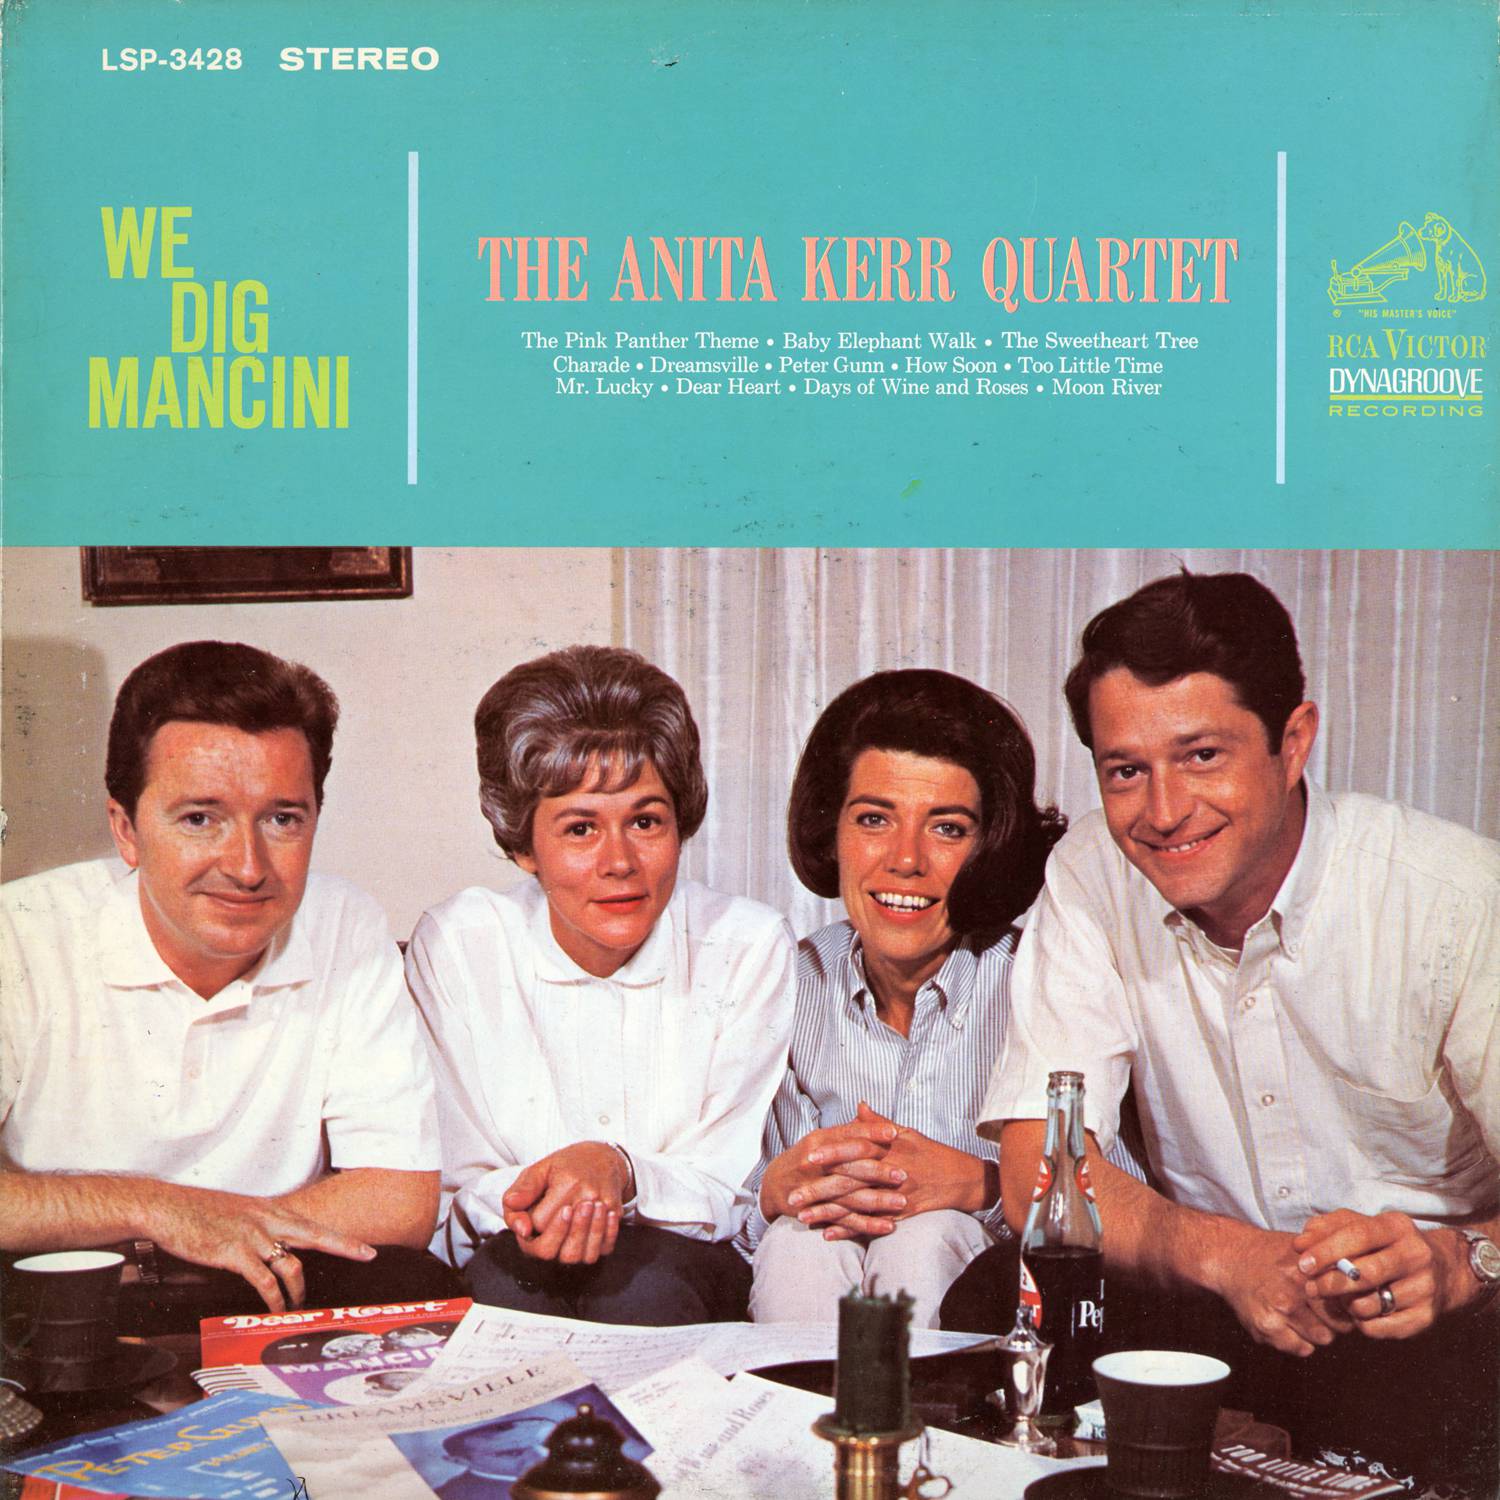 Anita Kerr Quartet - We Dig Mancini (1965/2015) [AcousticSounds FLAC 24bit/96kHz]